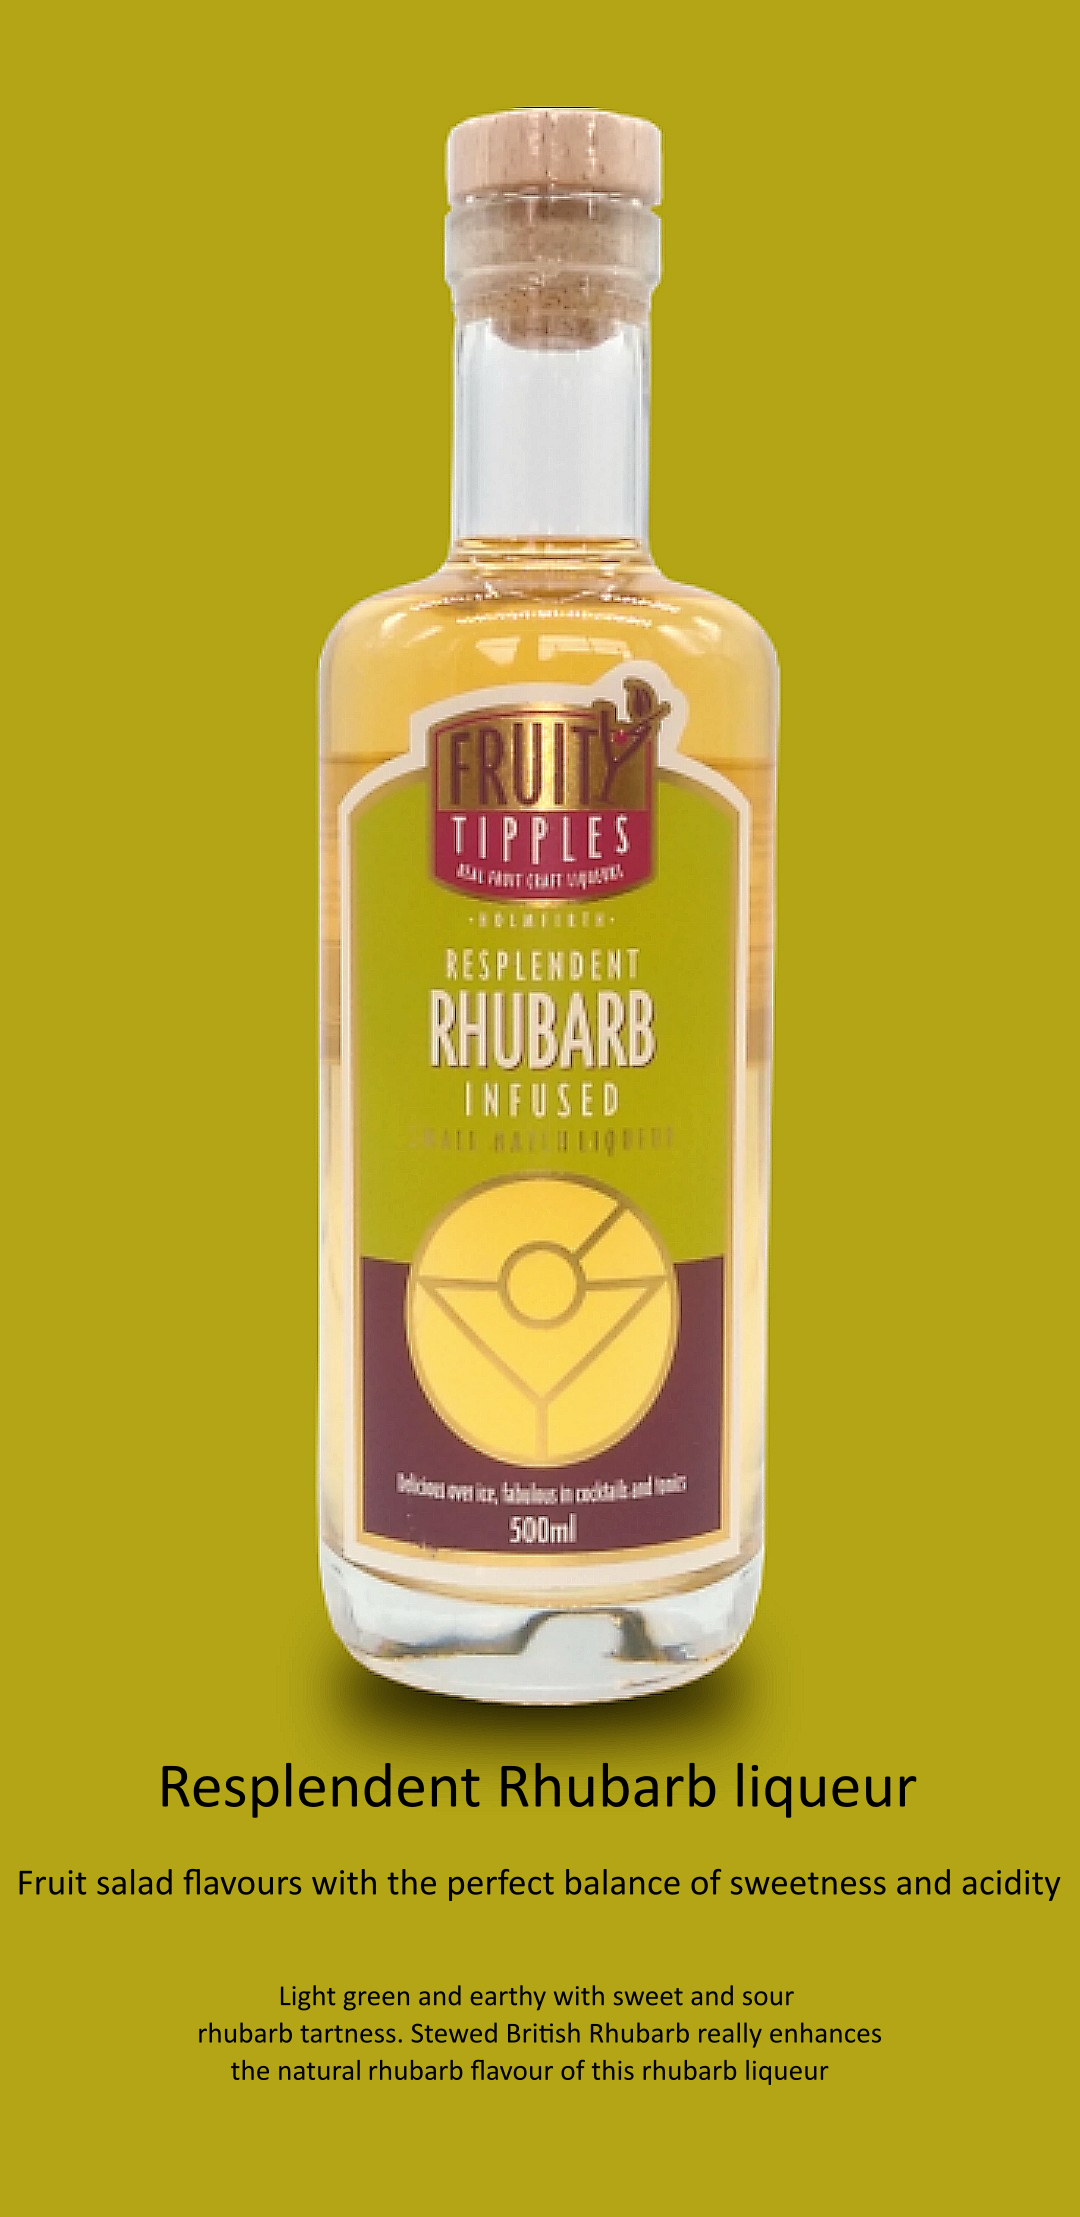 Rhubarb Liqueur by Fruity Tipples